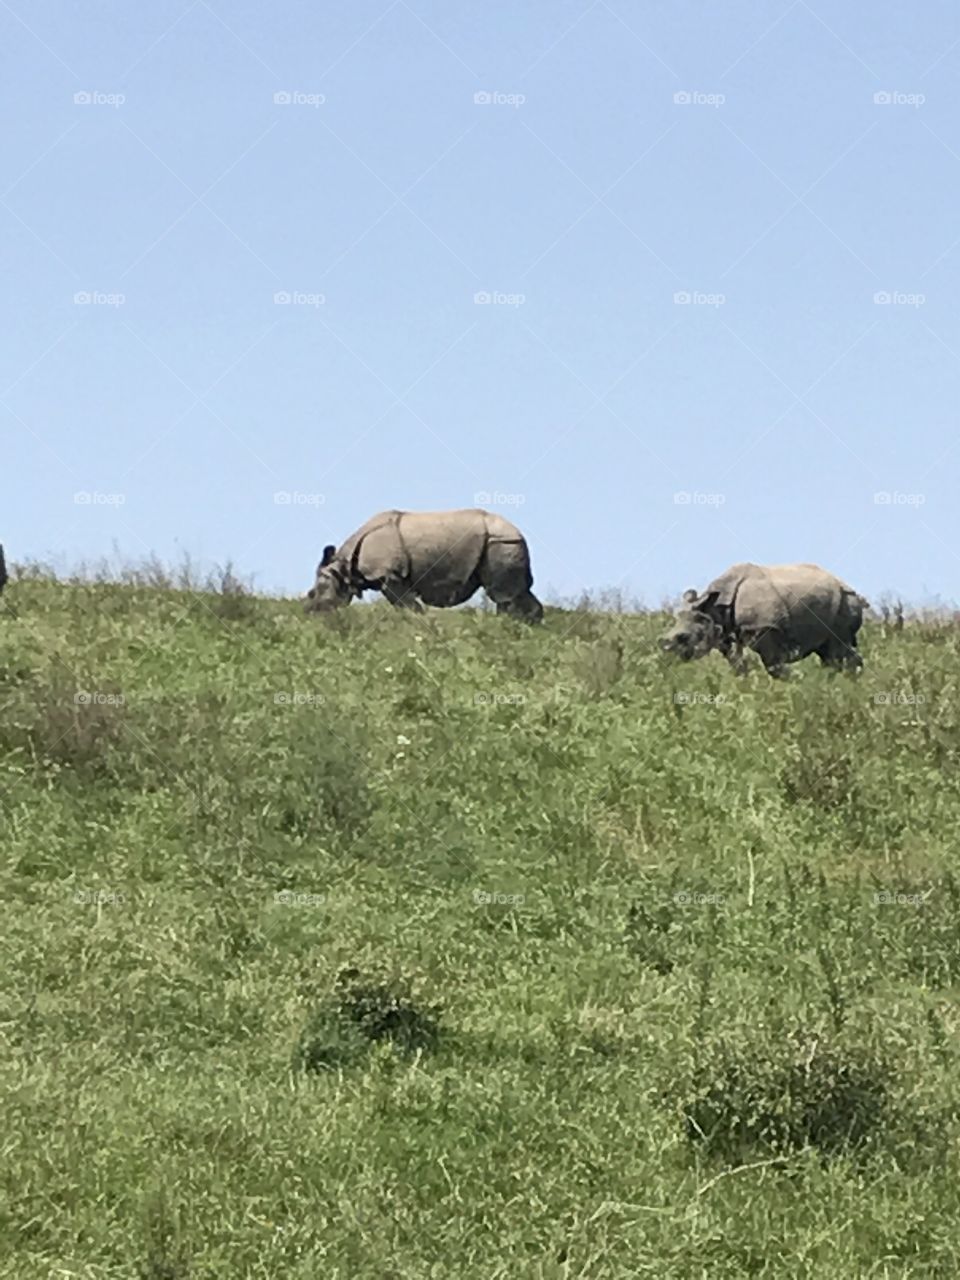 The rhino! 